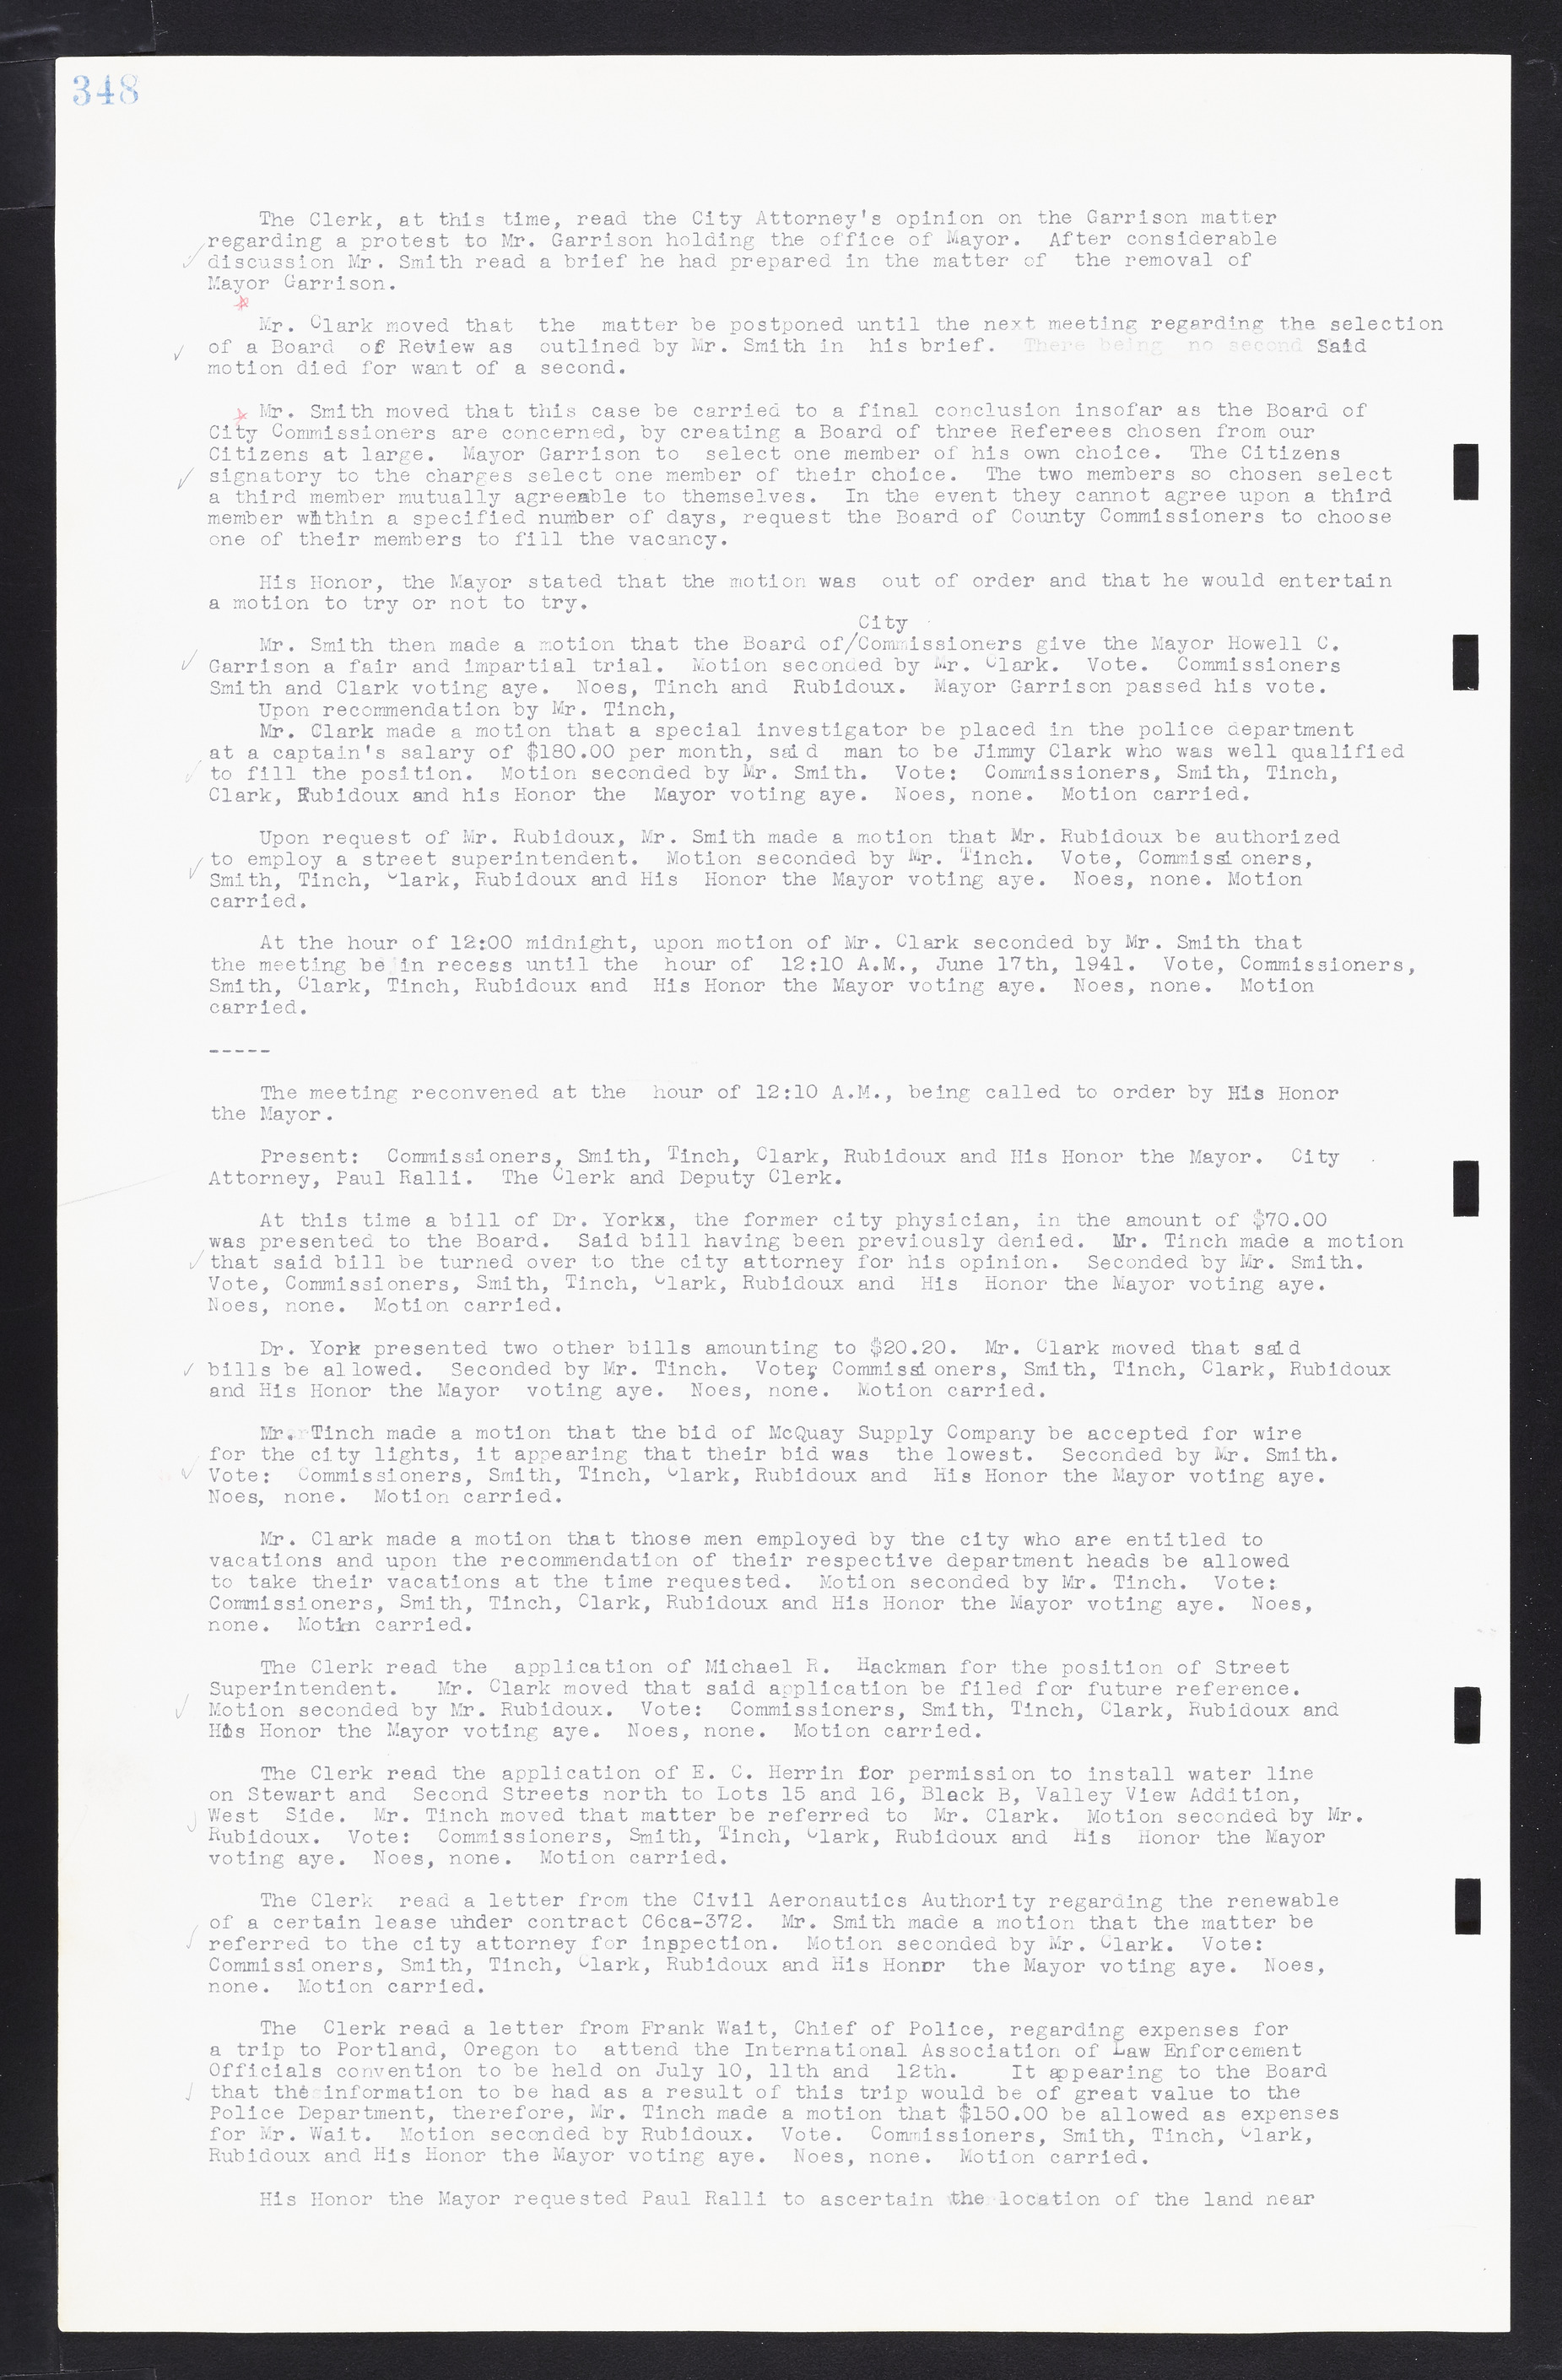 Las Vegas City Commission Minutes, February 17, 1937 to August 4, 1942, lvc000004-372